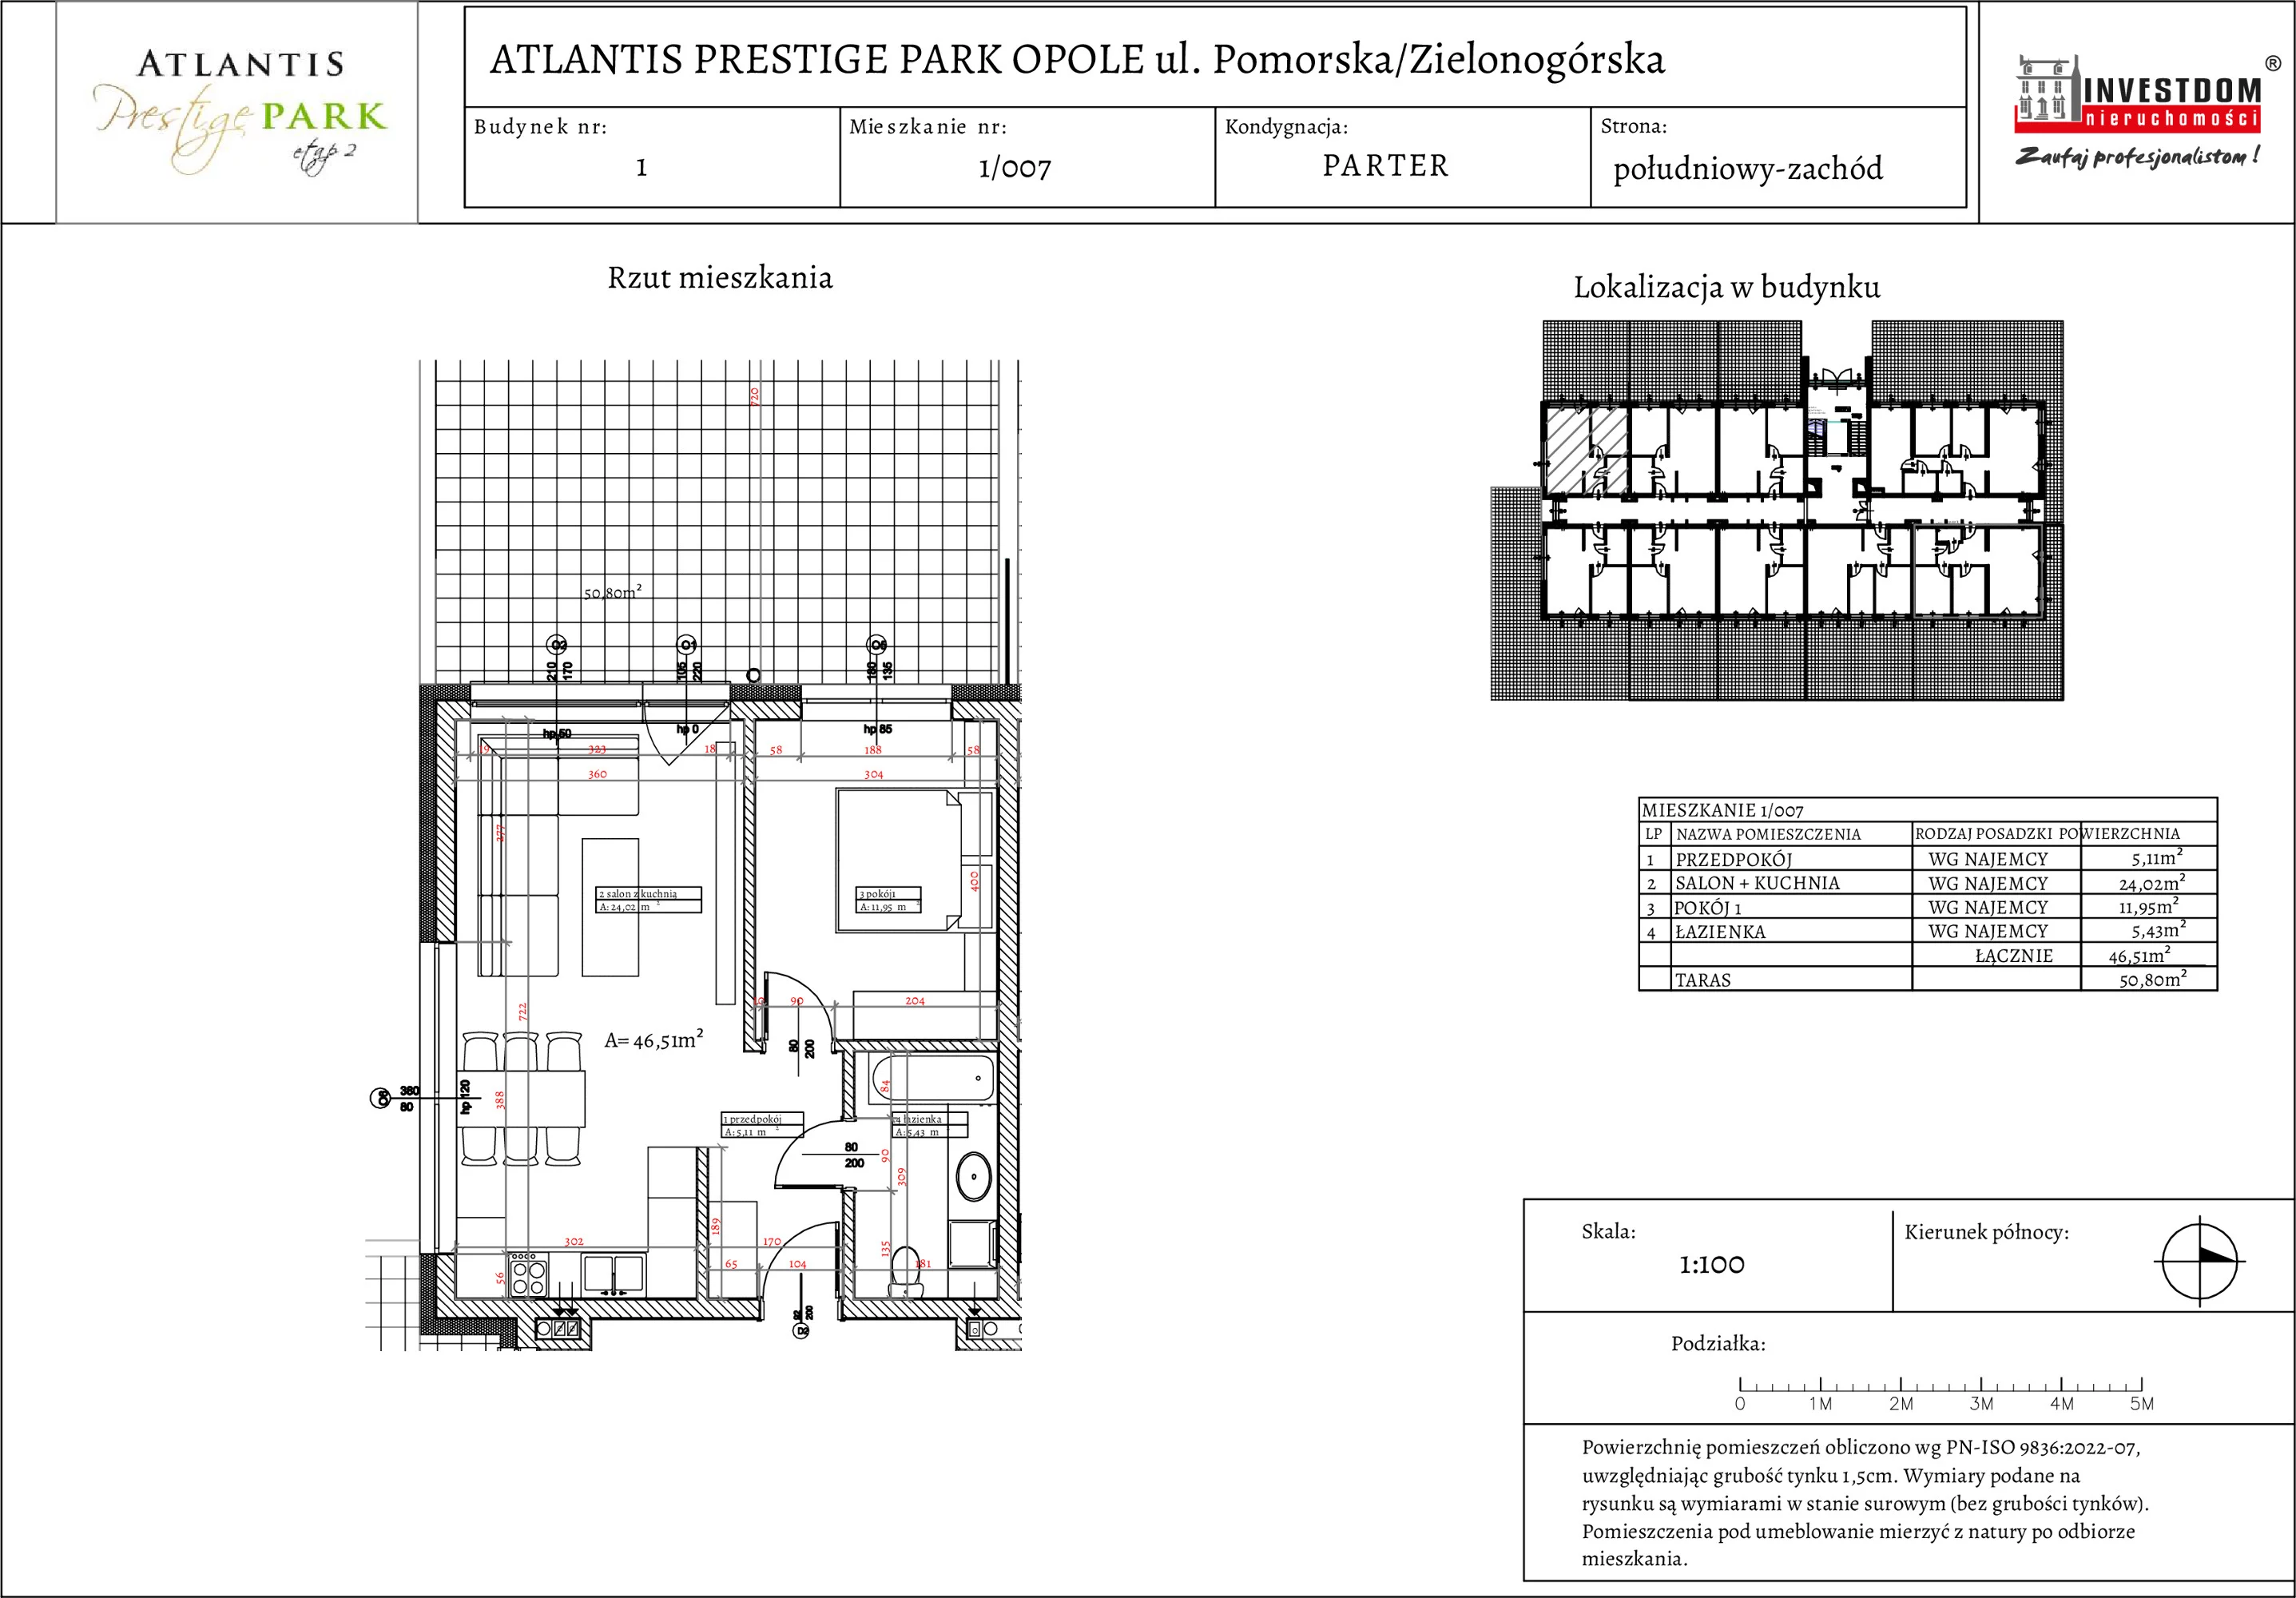 Apartament 46,51 m², parter, oferta nr 1/007, Atlantis Prestige Park, Opole, Malinka, ul. Pomorska / Zielonogórska / Harcmistrza Kamińskiego